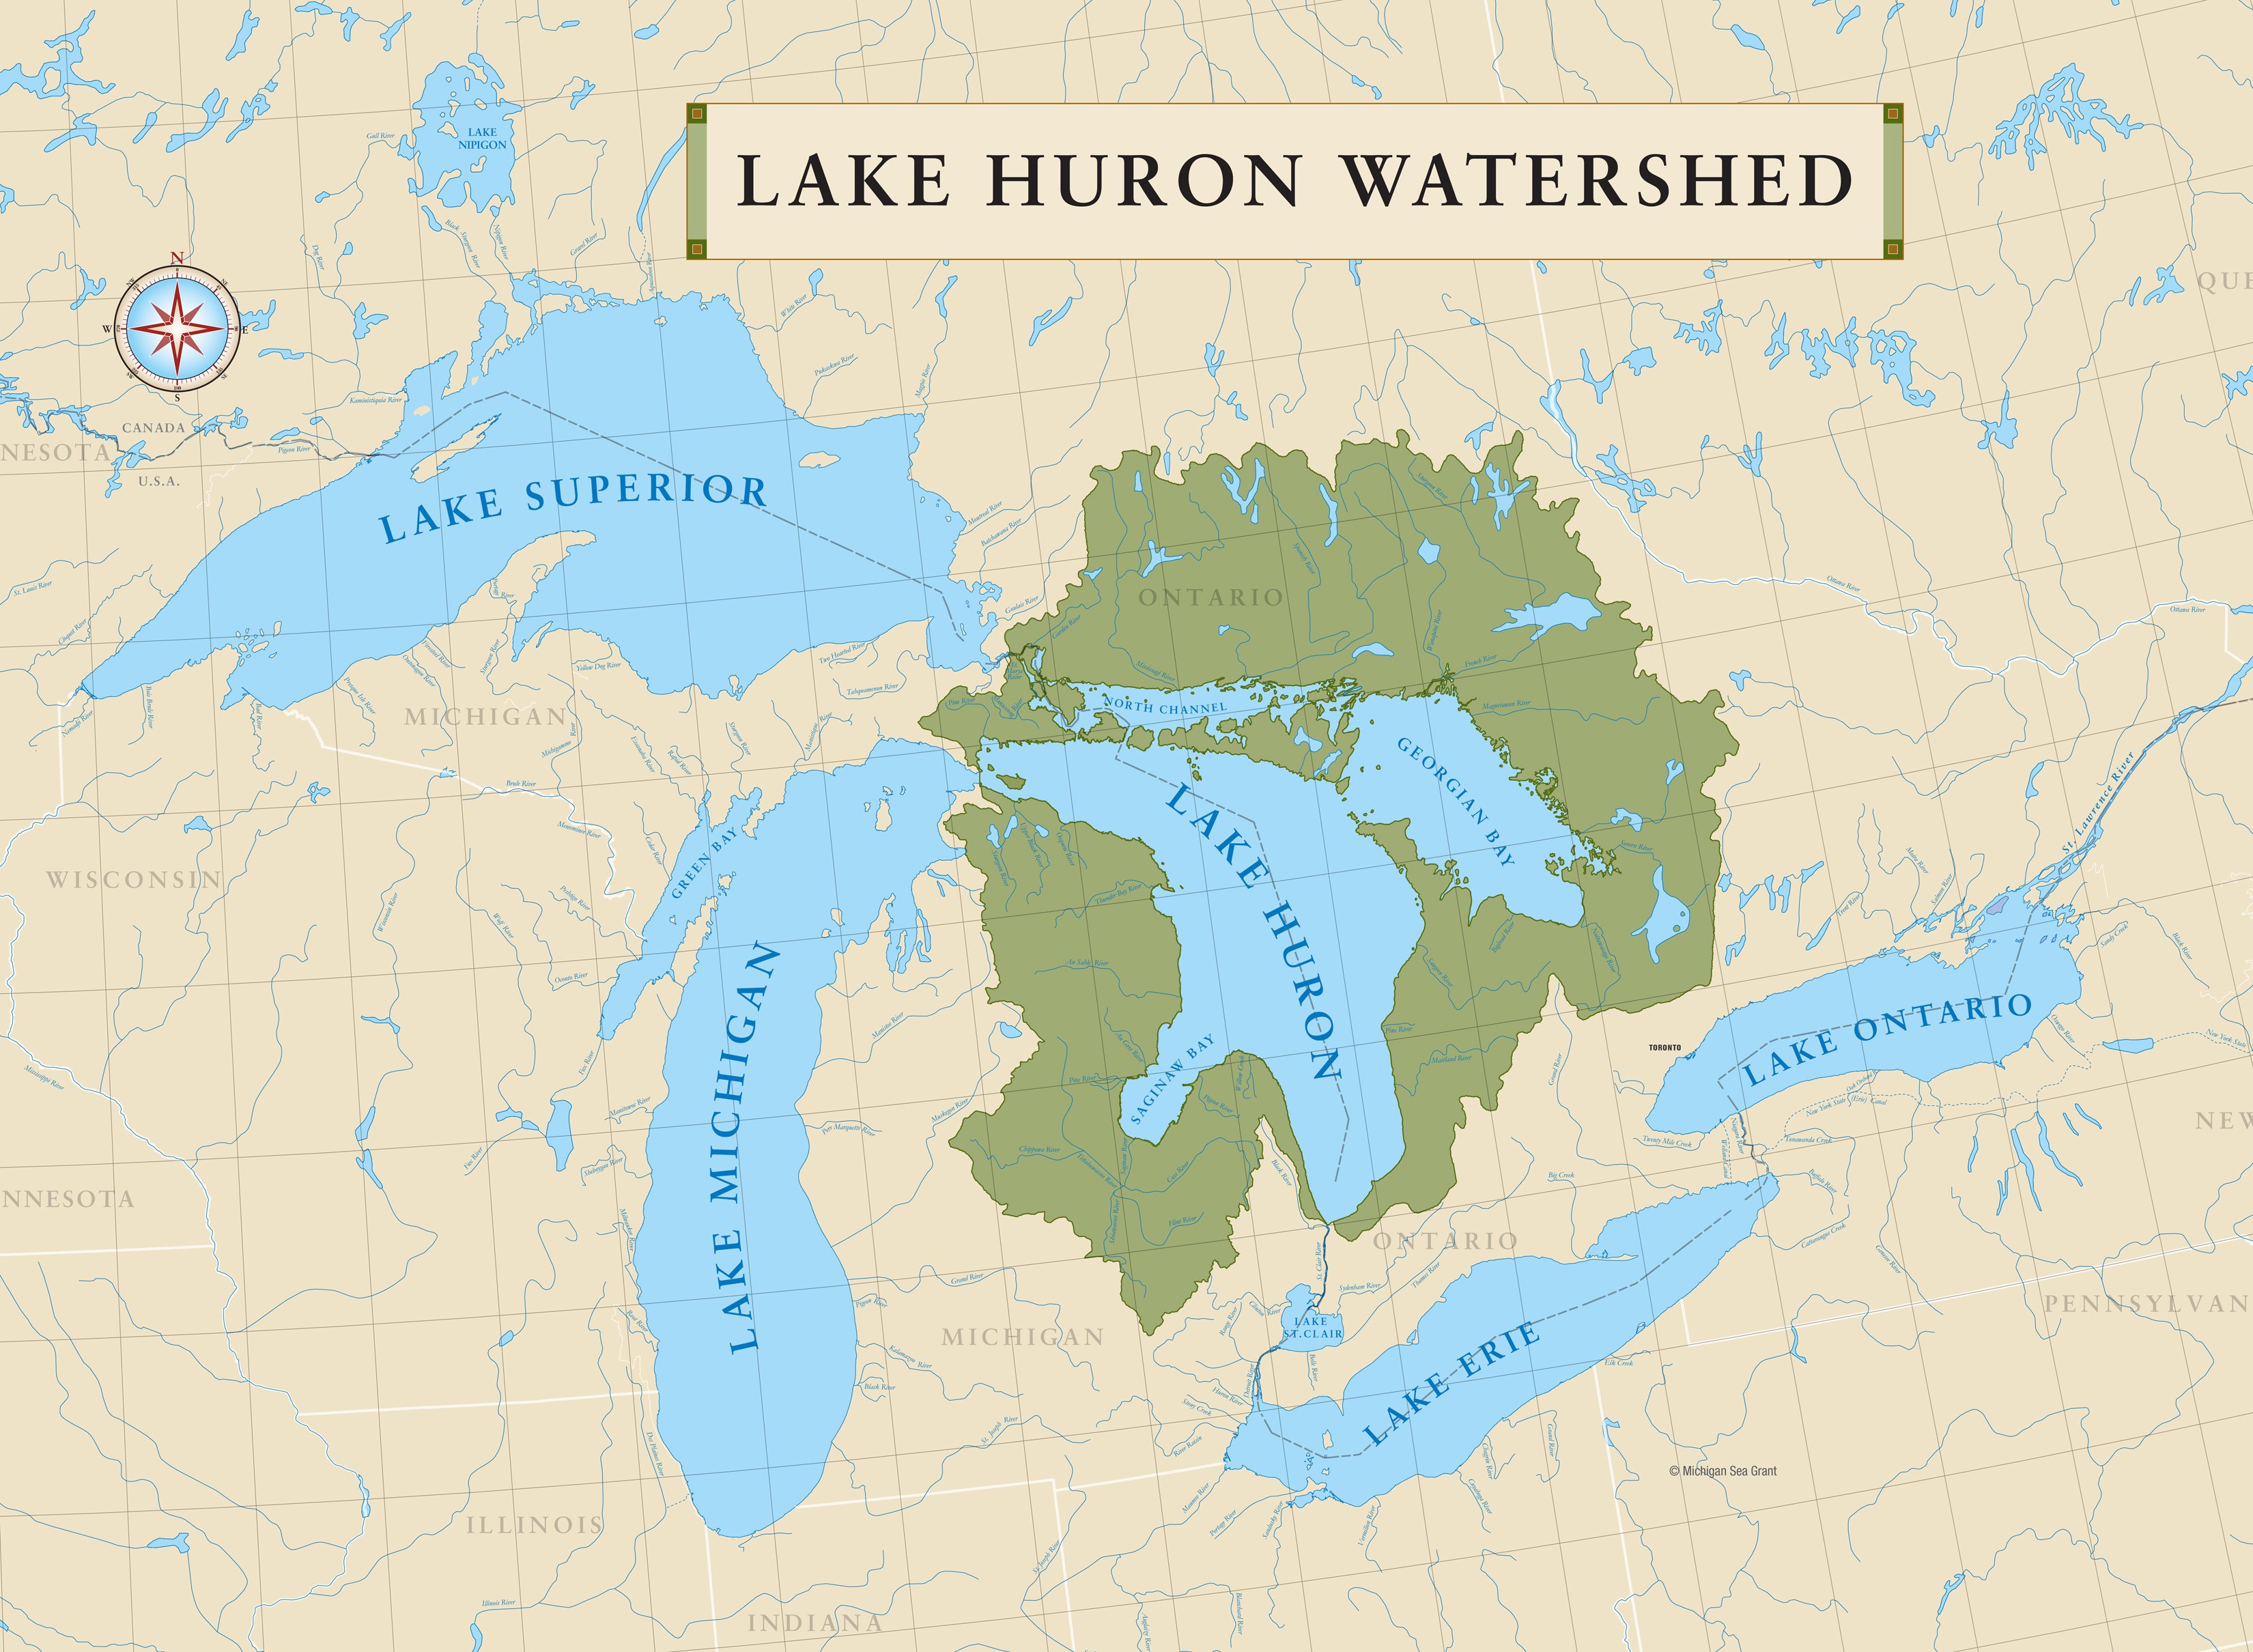 Средняя глубина озера гурон. Великие американские озера на контурной карте. Озеро верхнее Гурон Мичиган на карте. Озера верхнее Мичиган Гурон Эри Онтарио на карте Северной Америки. Озеро верхнее Мичиган Гурон Эри Онтарио.